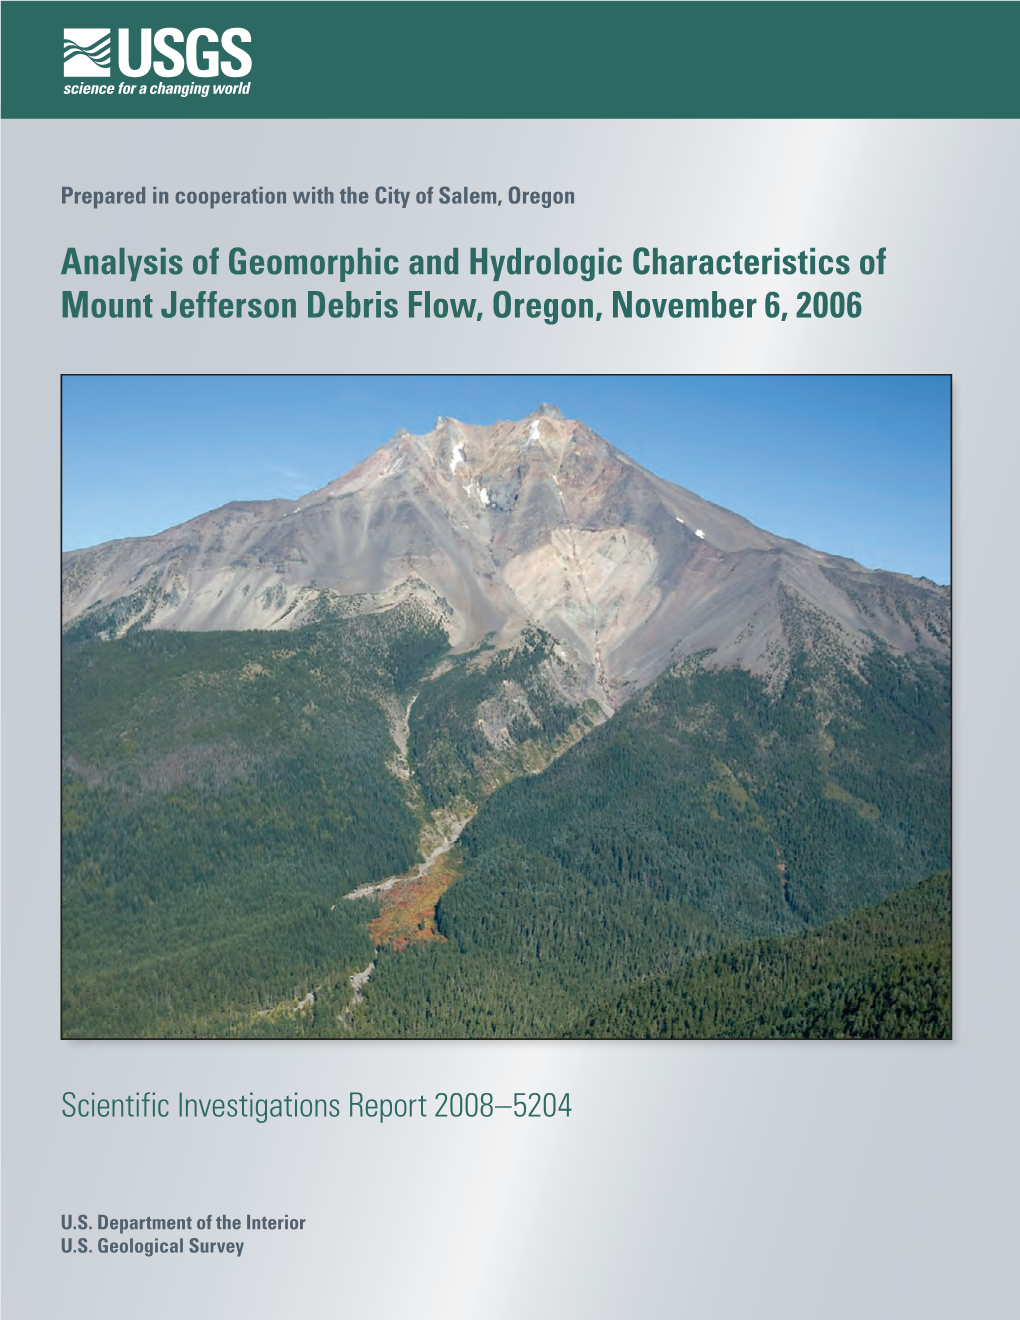 Analysis of Geomorphic and Hydrologic Characteristics of Mount Jefferson Debris Flow, Oregon, November 6, 2006